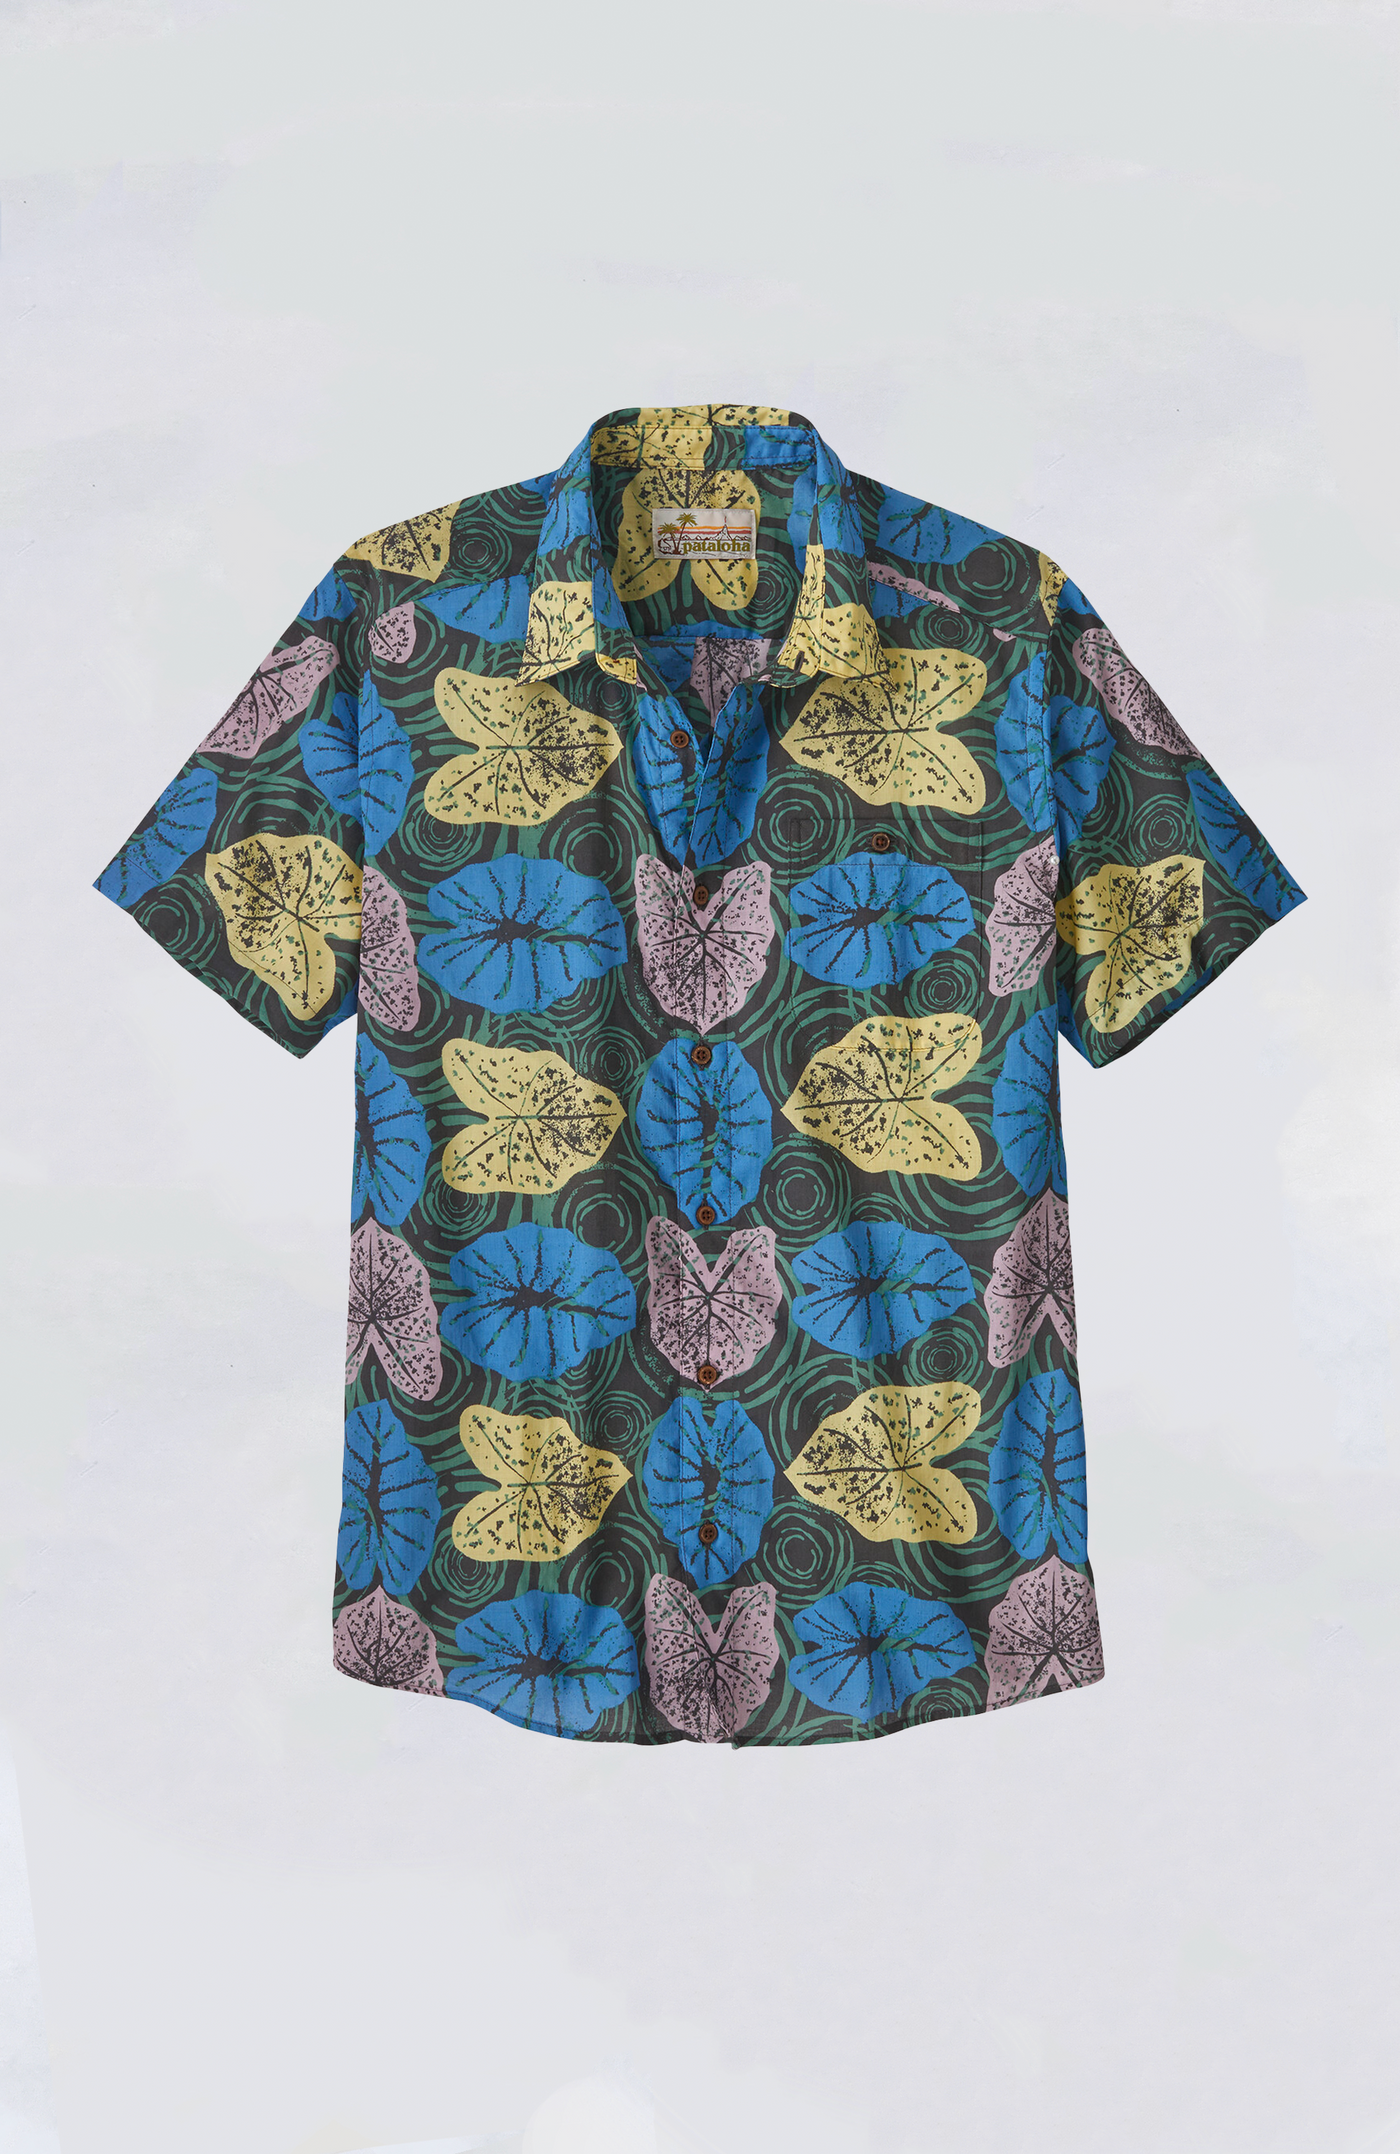 Patagonia Aloha Shirt - M's Malihini Pataloha Shirt